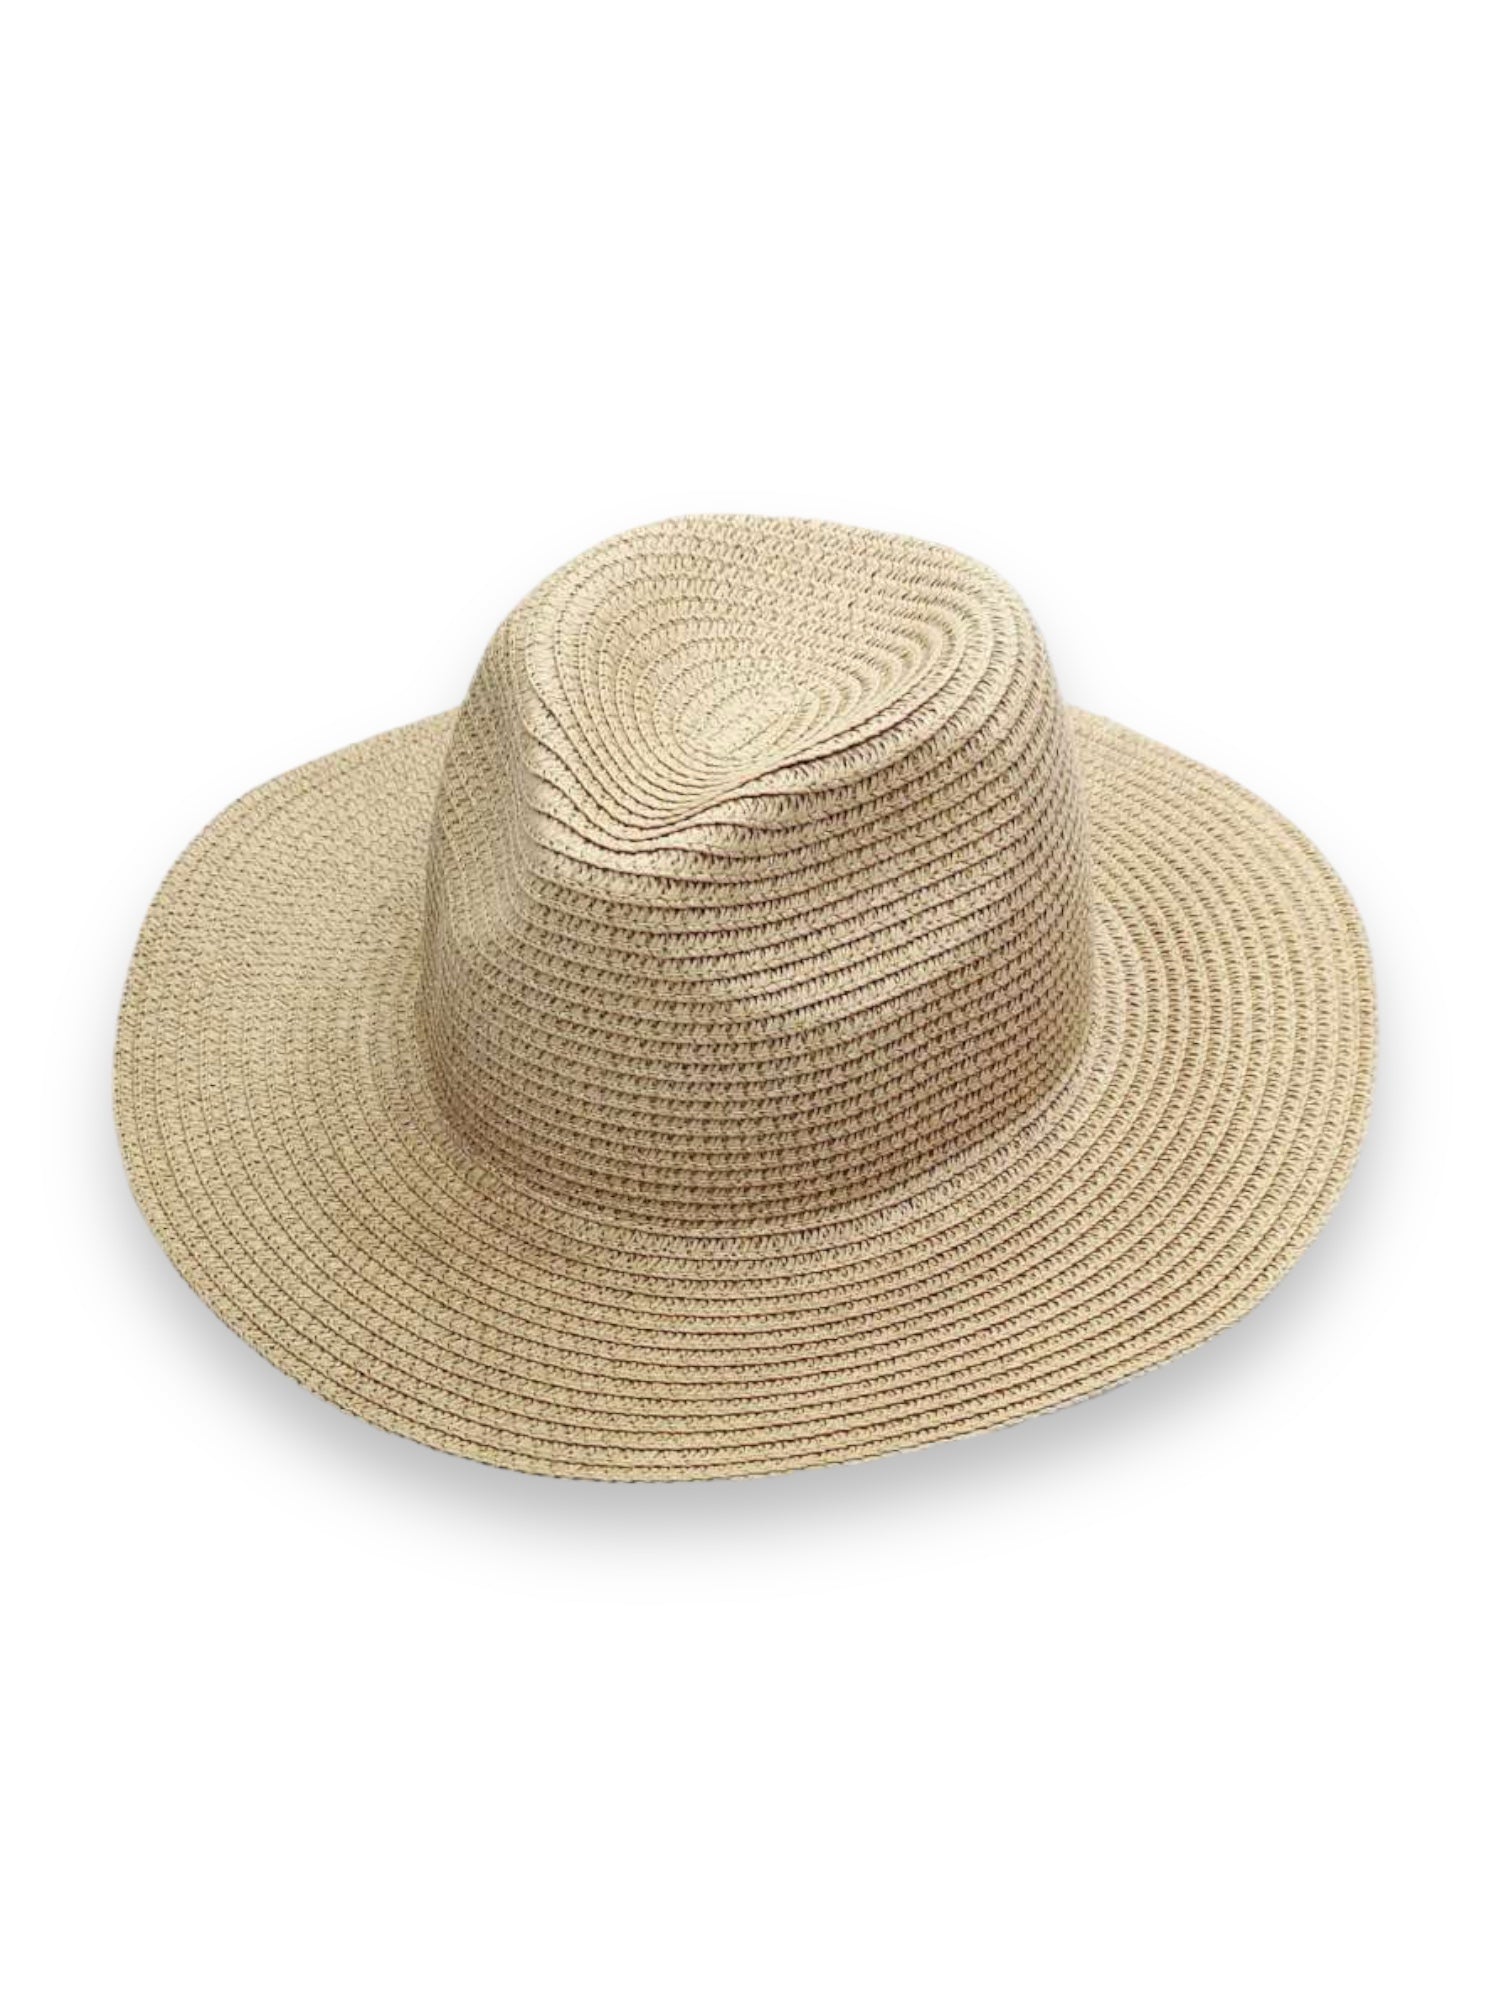 "Beach" hat